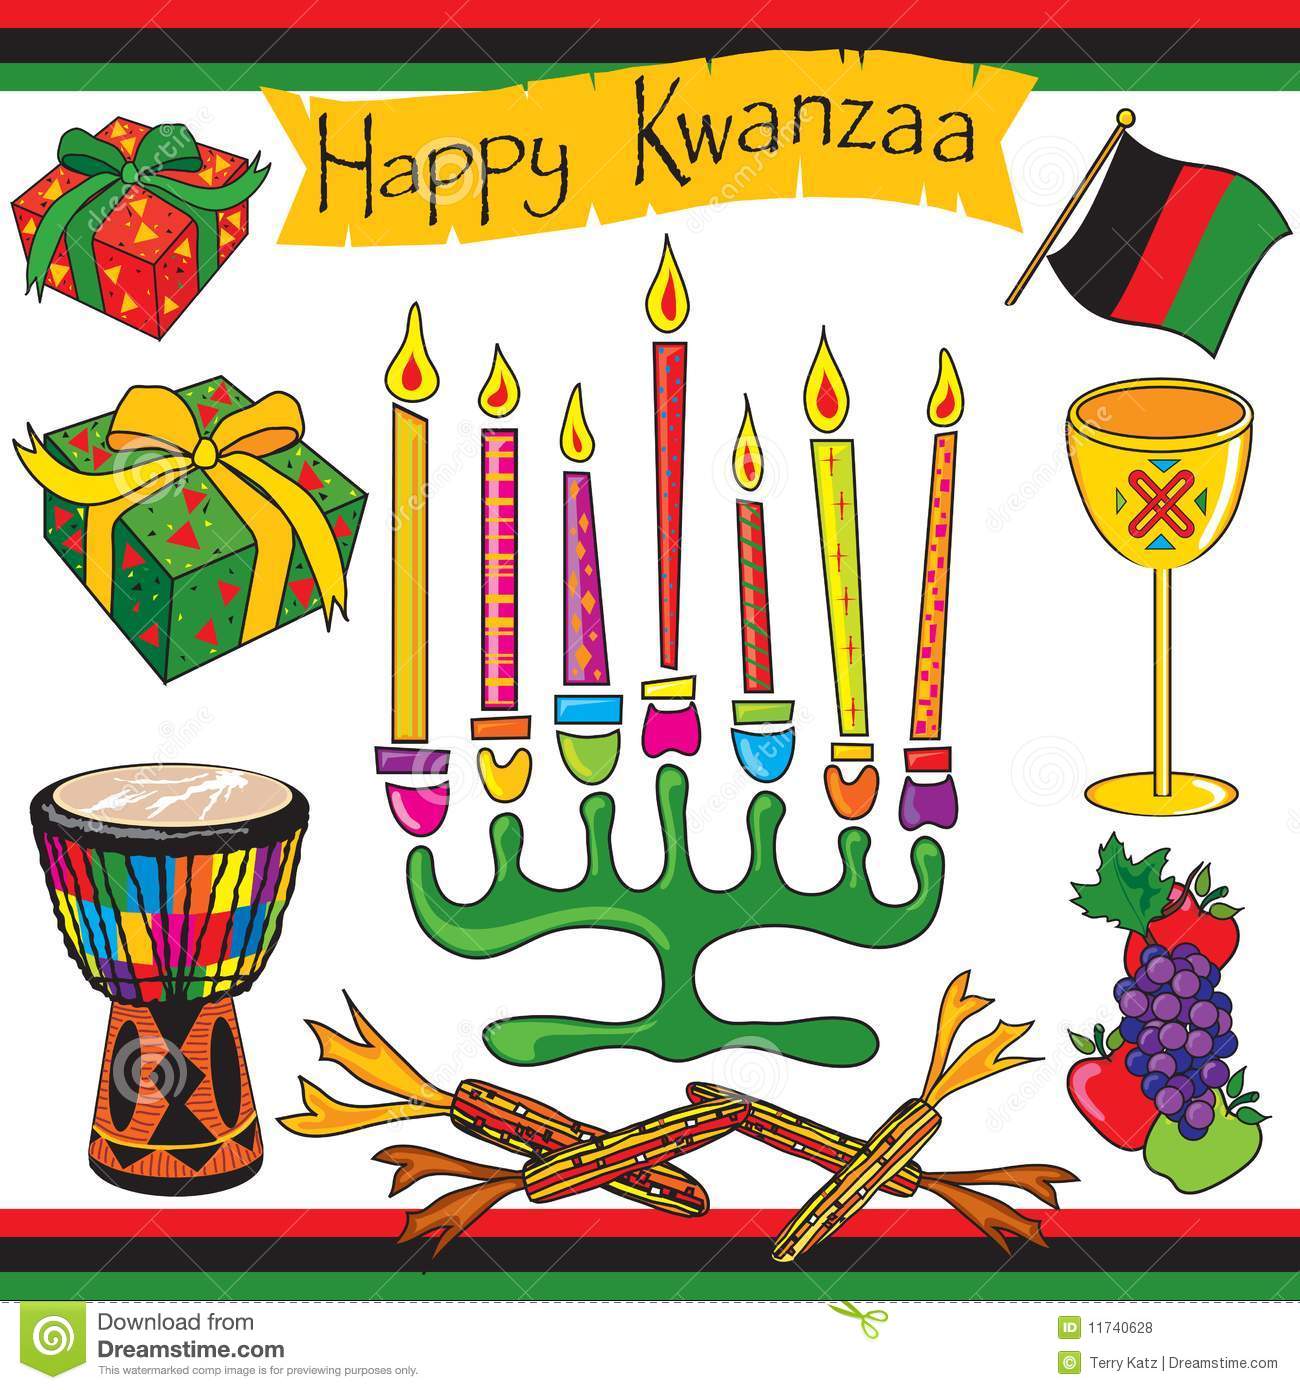 Happy Kwanzaa clip art and icons